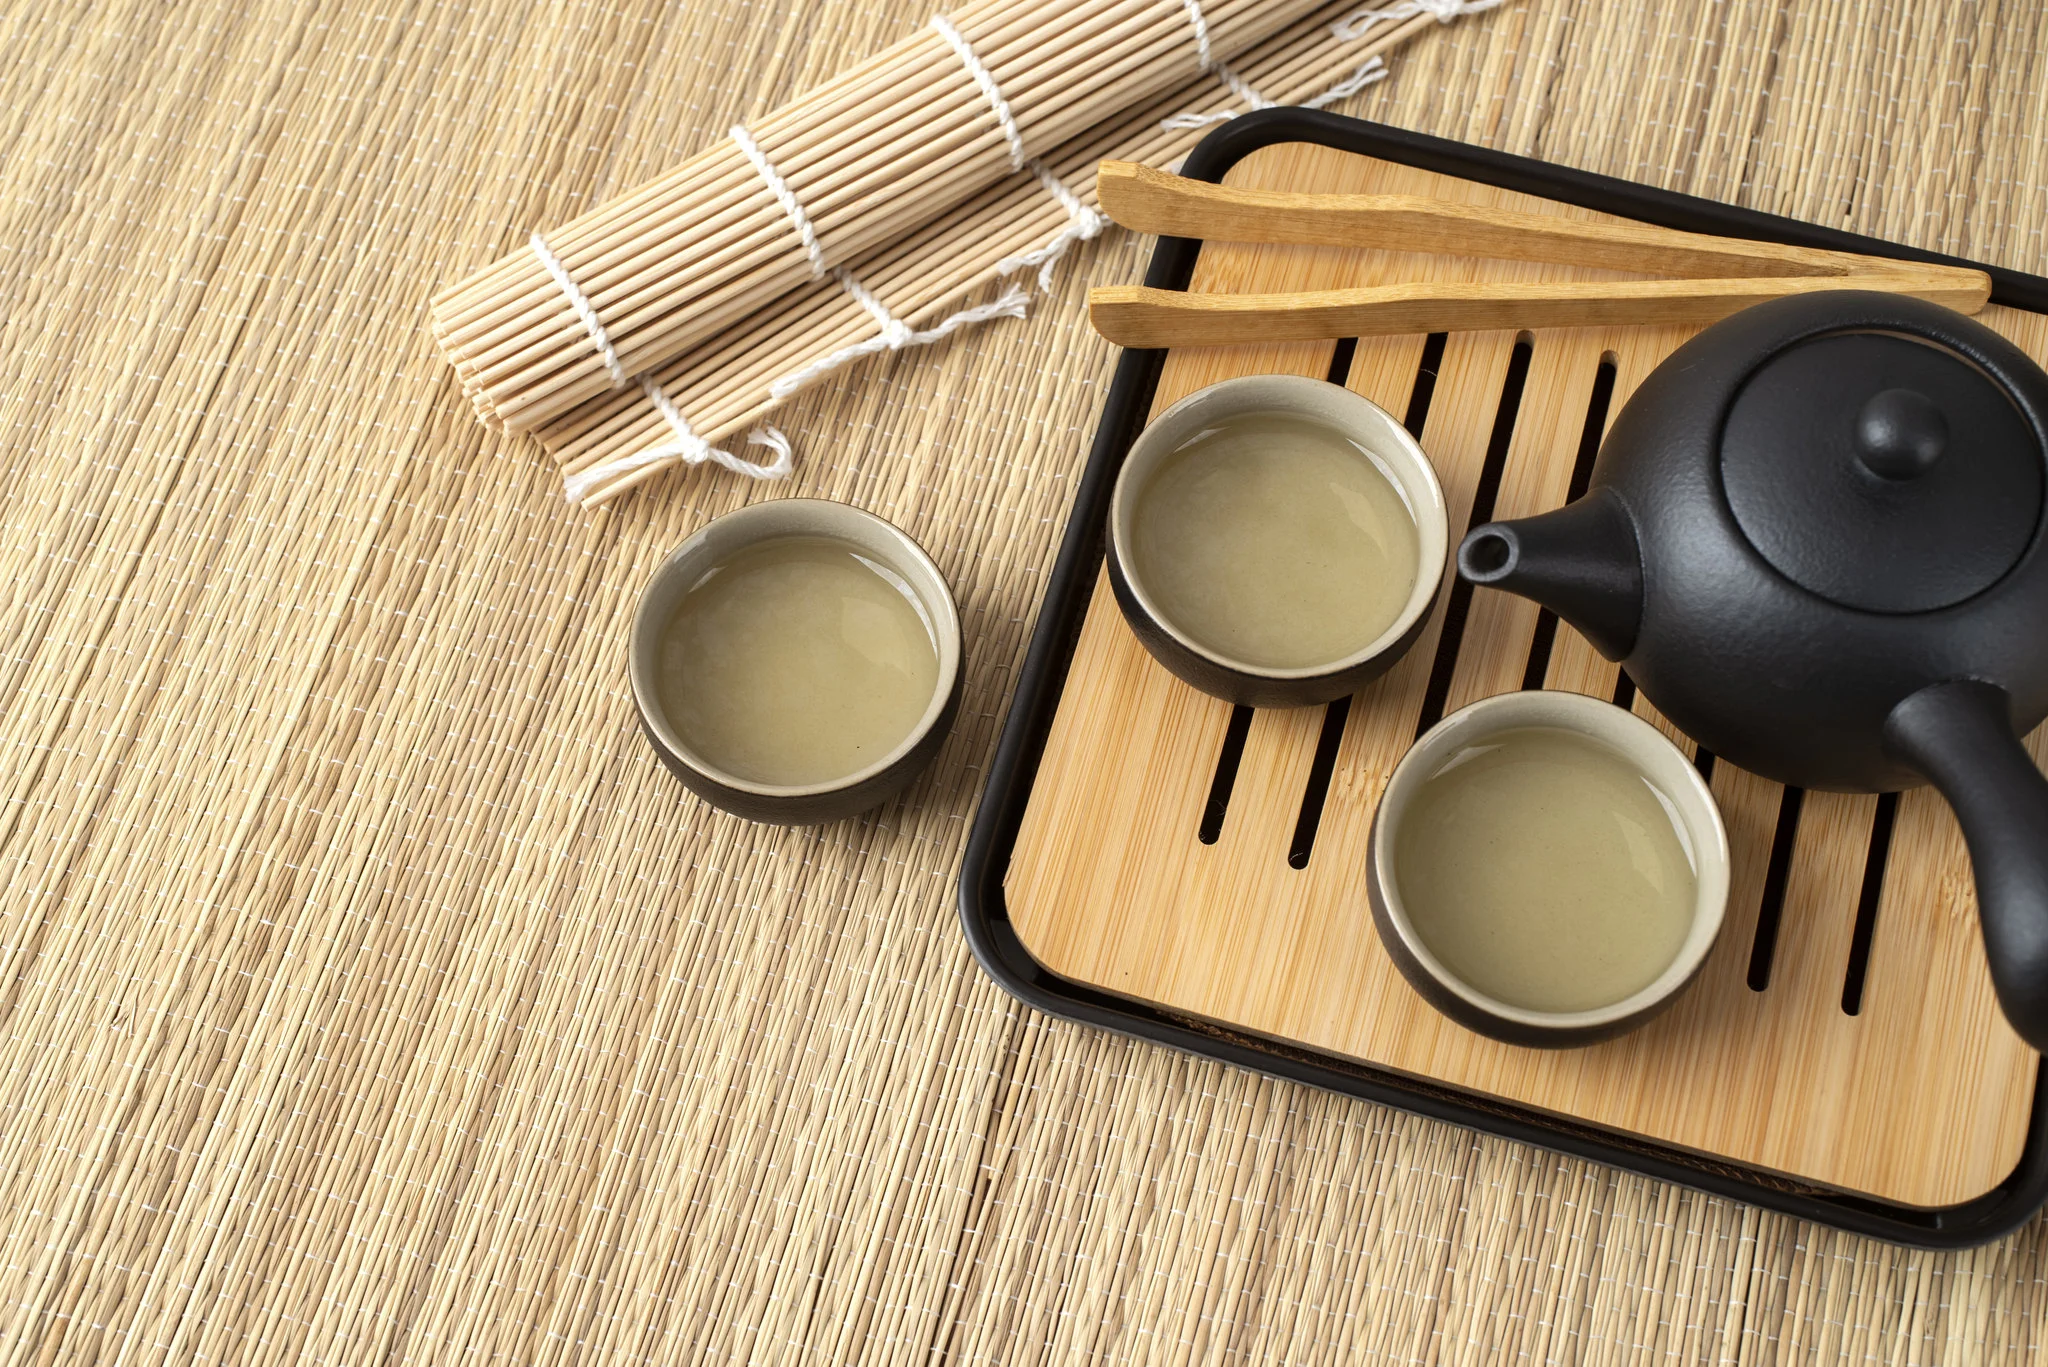 Esteira de bambu, hashi e conjunto de chá representando  produtos japoneses para vender online